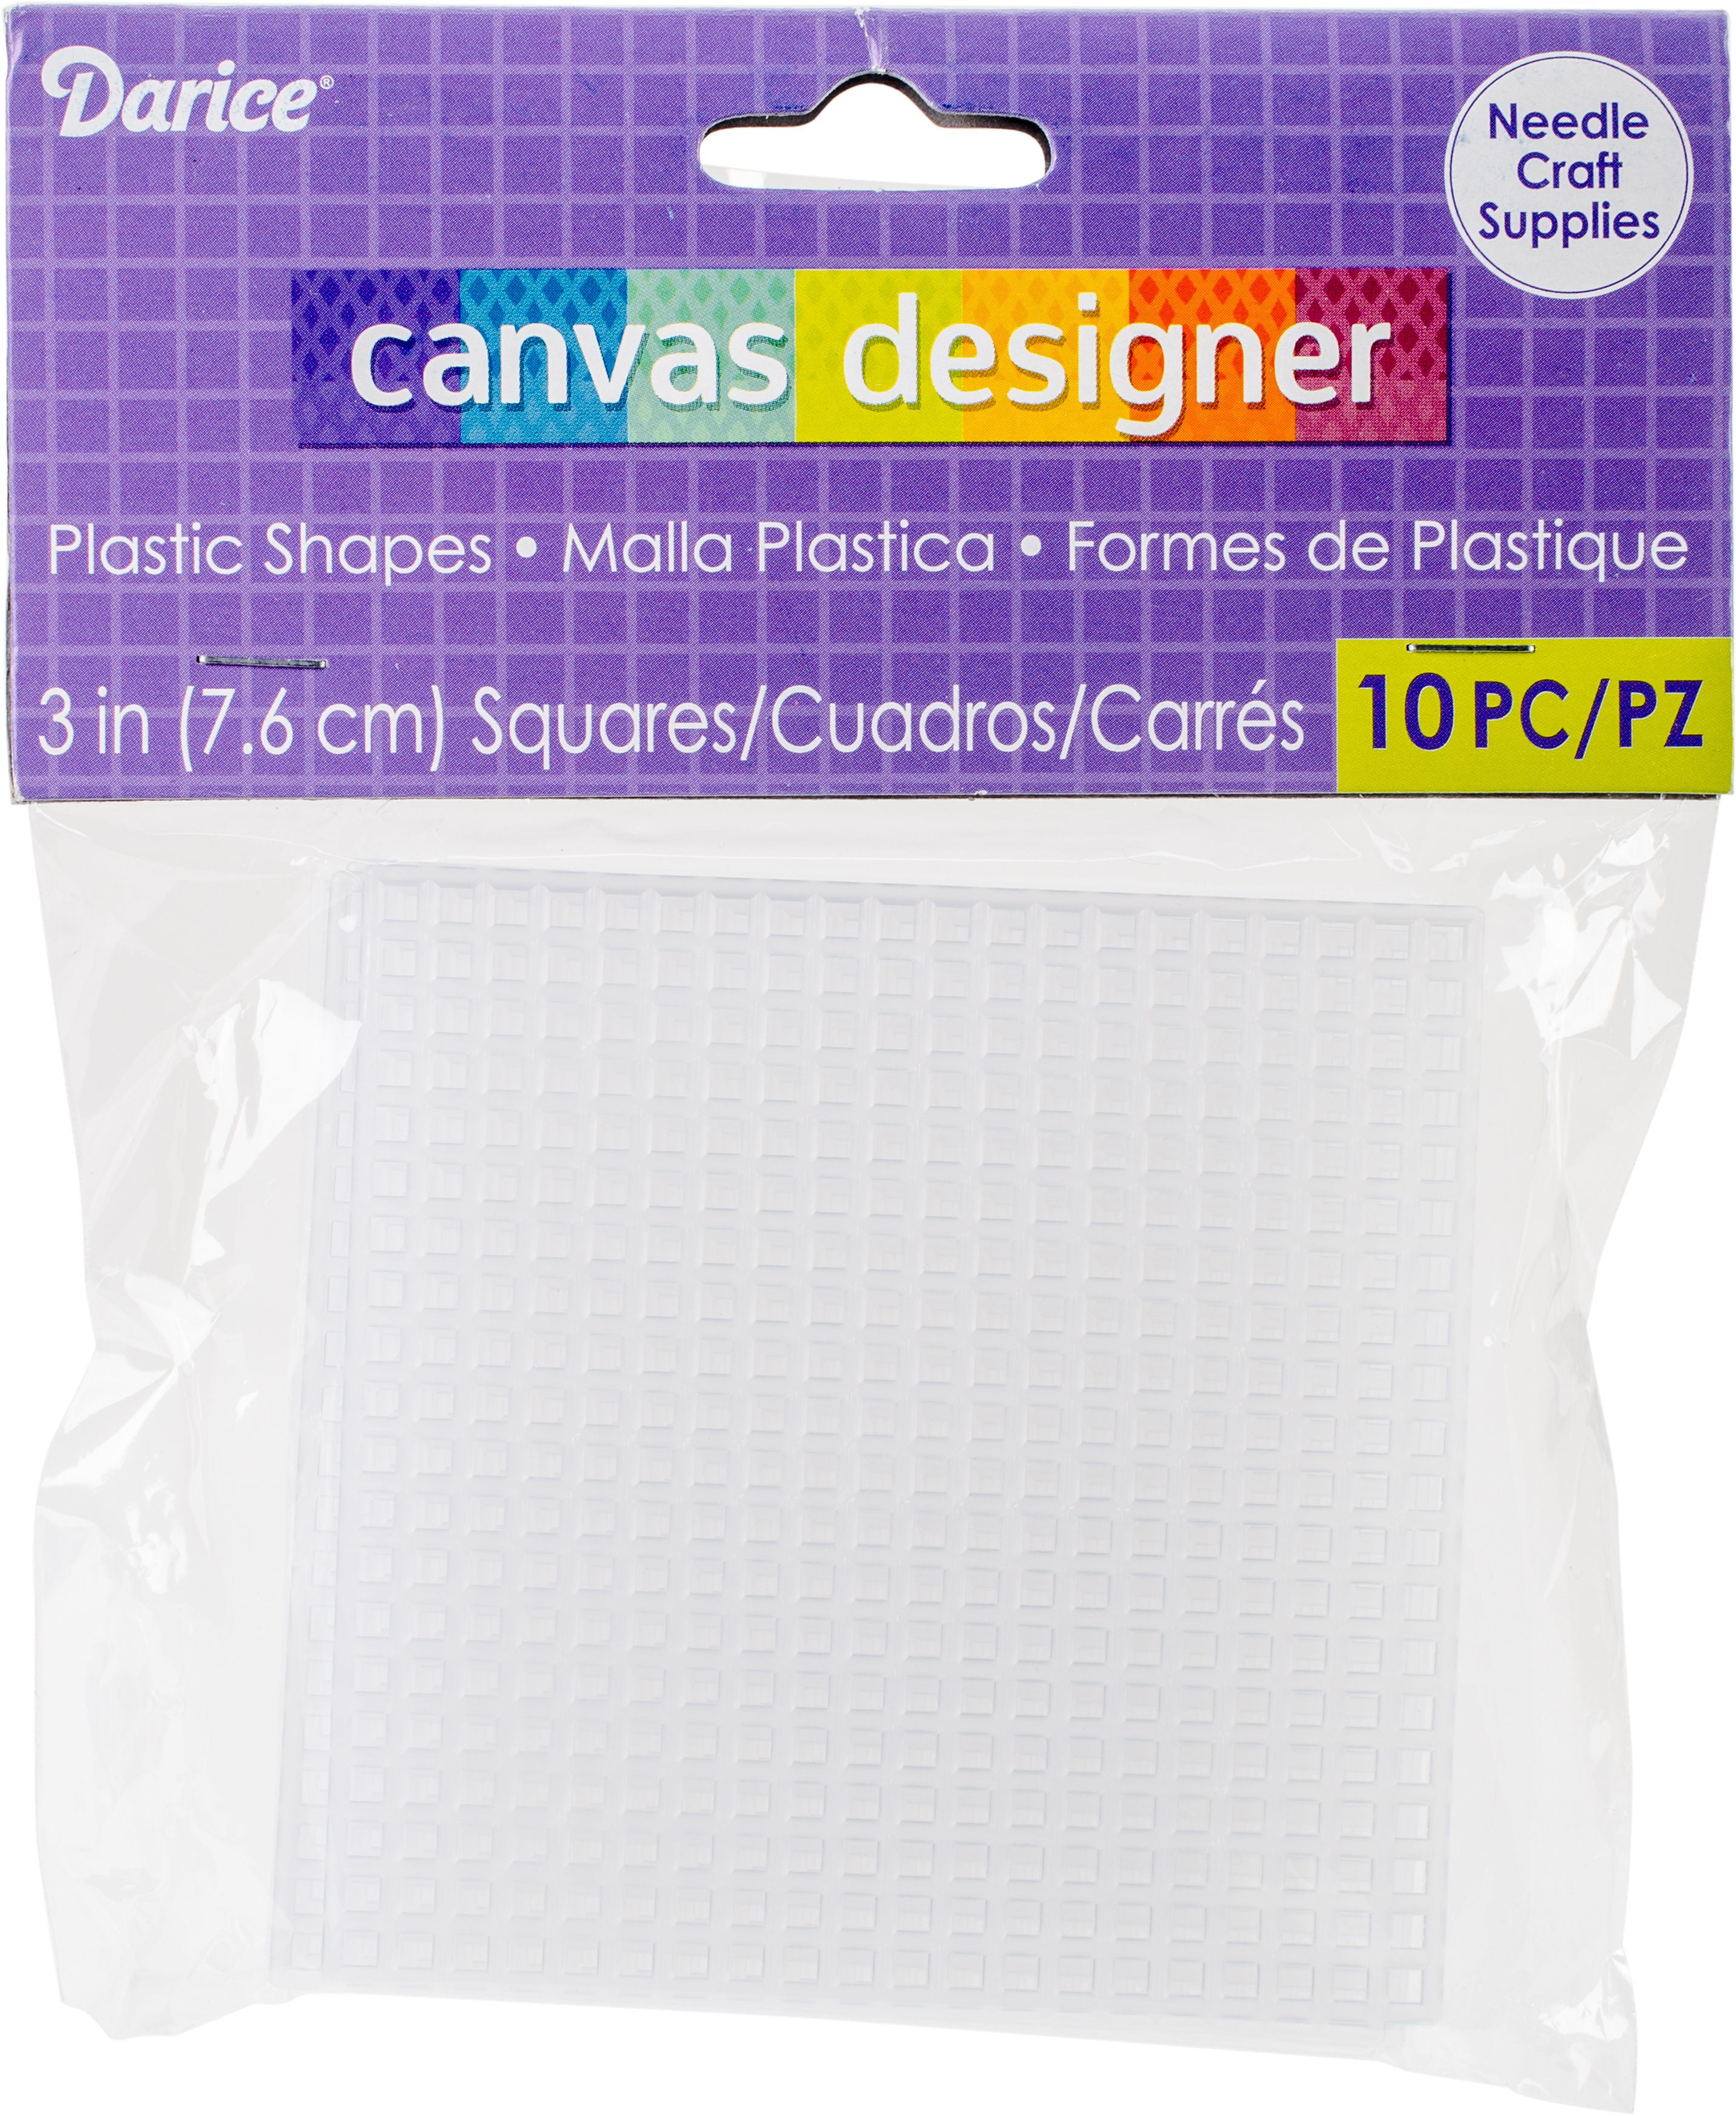 Plastic canvas needless #18 3pc/pz